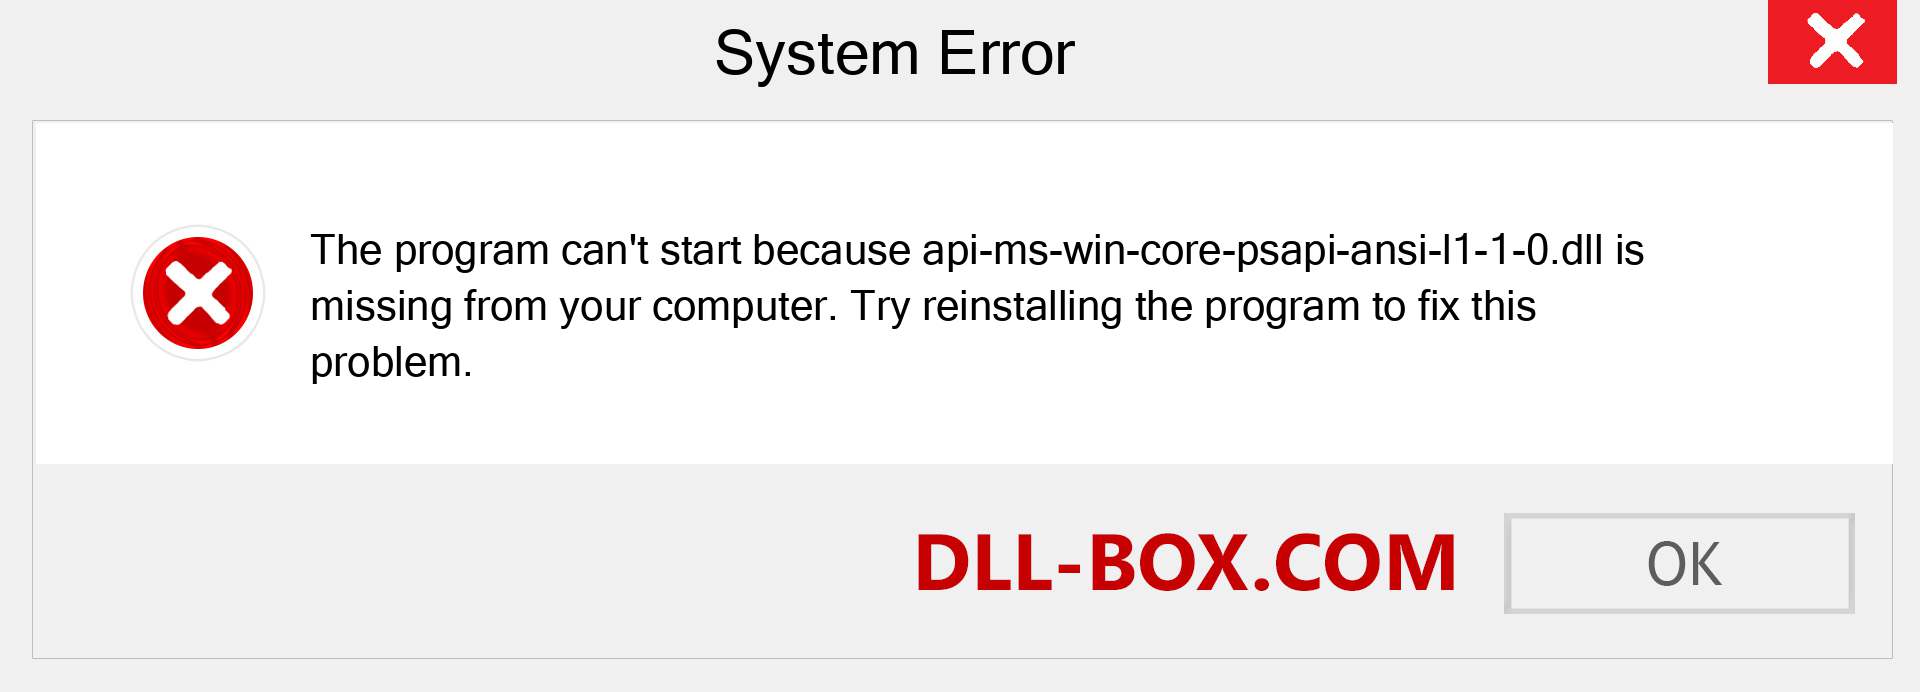  api-ms-win-core-psapi-ansi-l1-1-0.dll file is missing?. Download for Windows 7, 8, 10 - Fix  api-ms-win-core-psapi-ansi-l1-1-0 dll Missing Error on Windows, photos, images